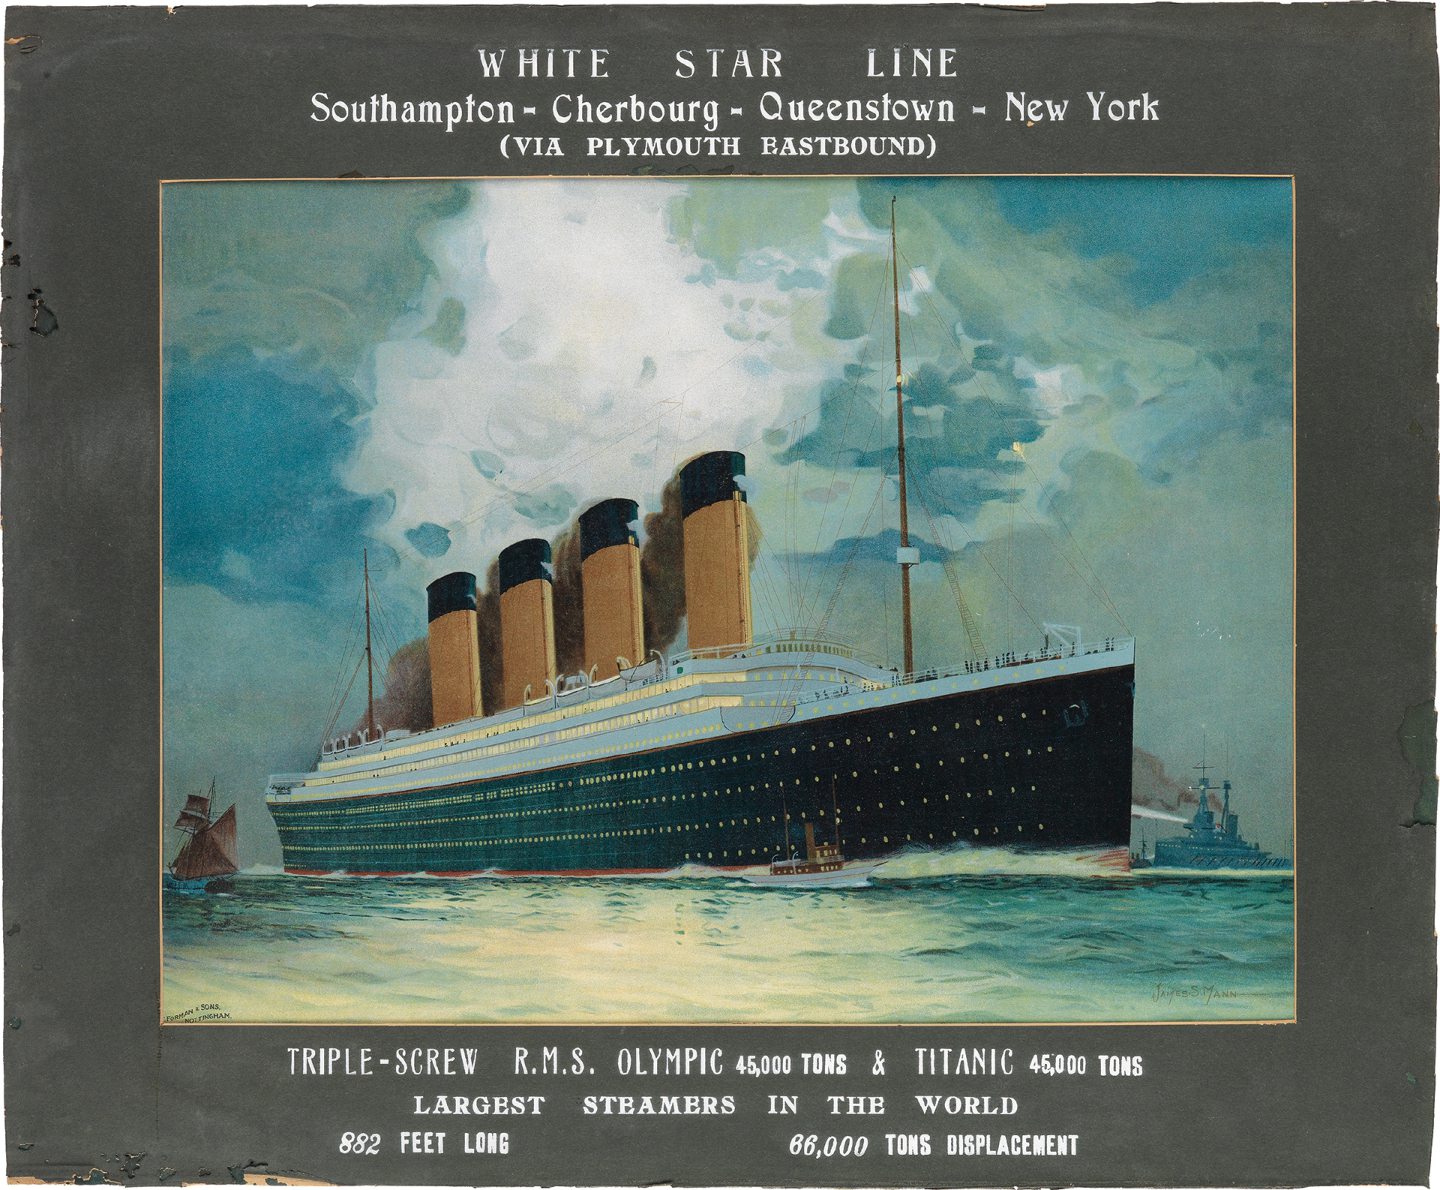 A White Star Line Titanic poster